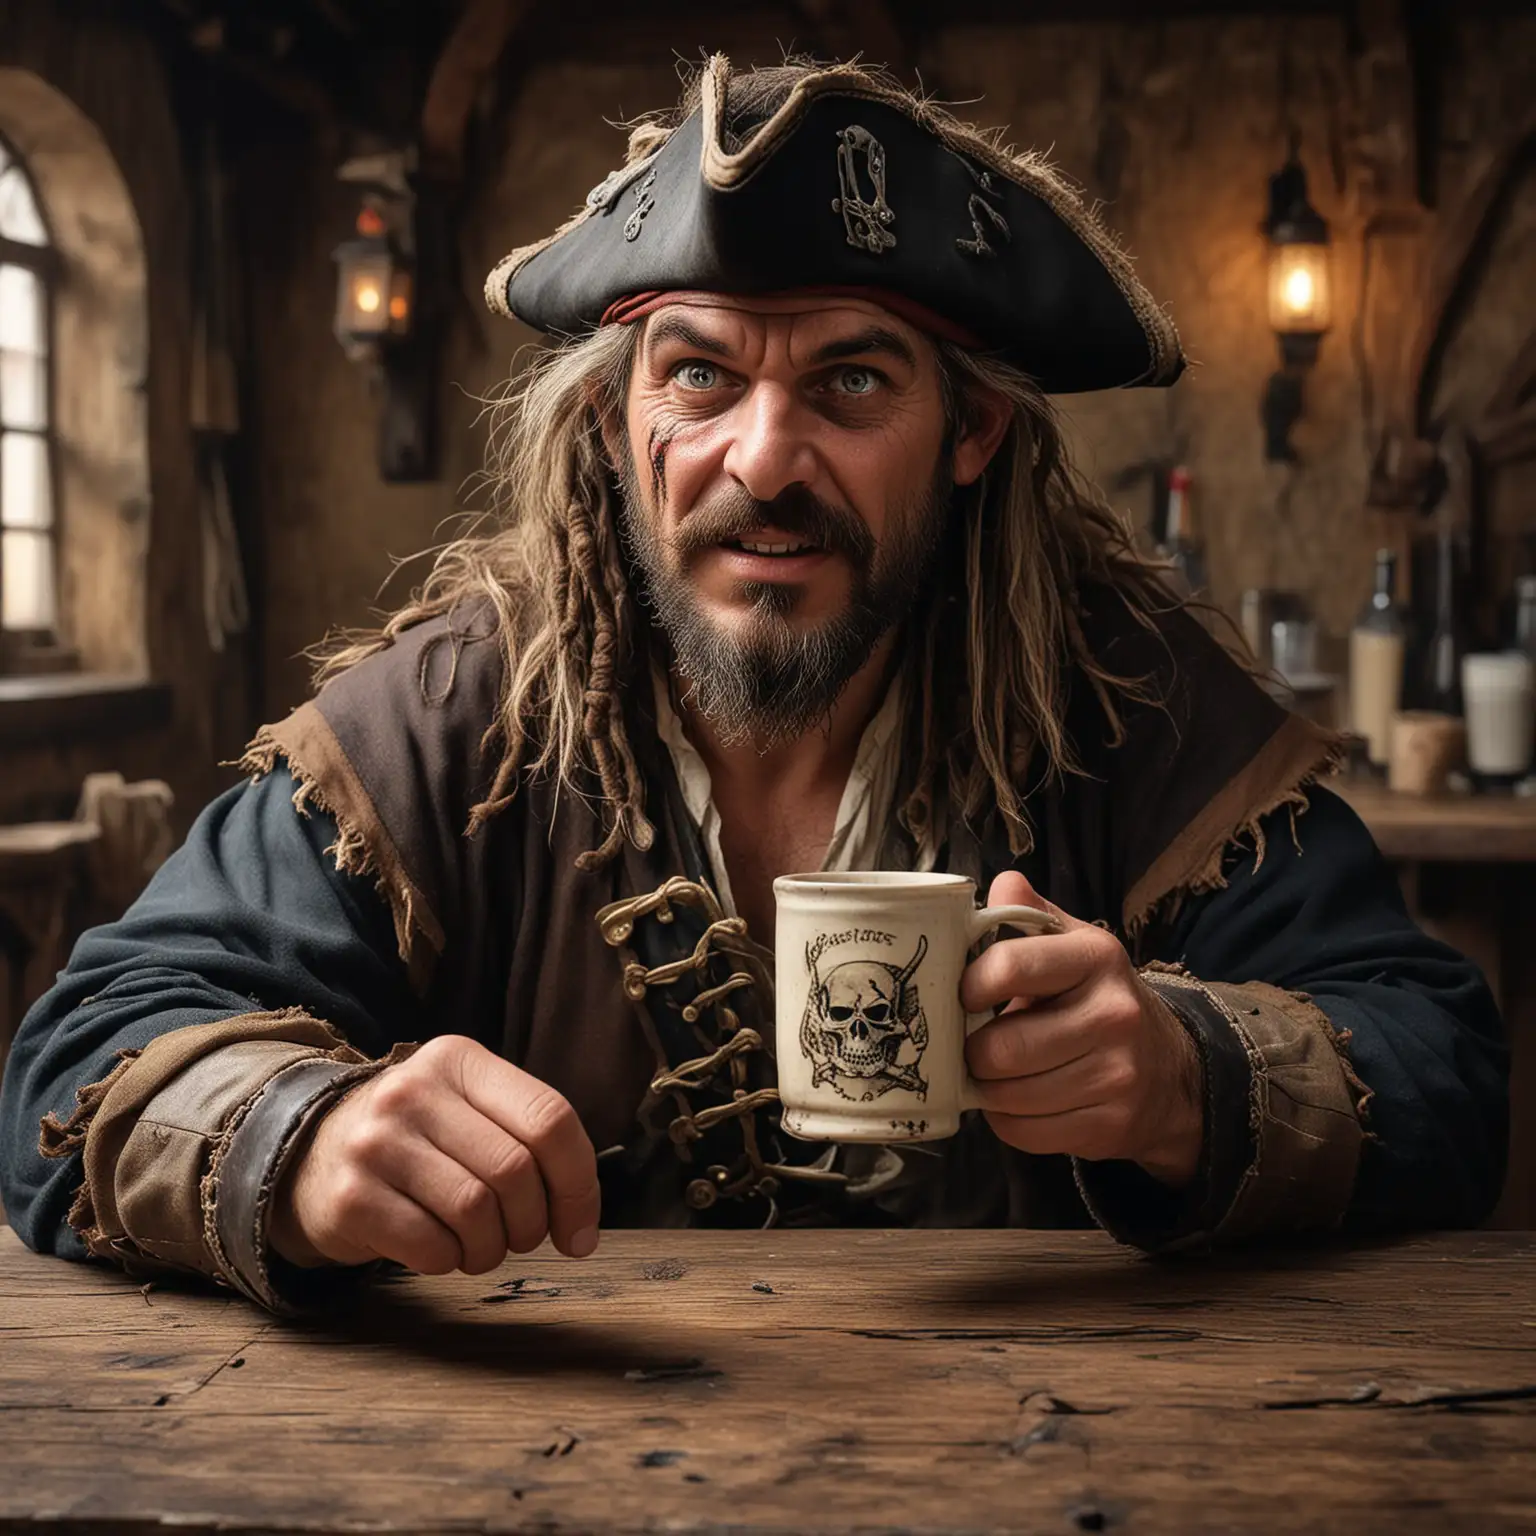 Gruff Pirate Sitting in Medieval Tavern with Mug